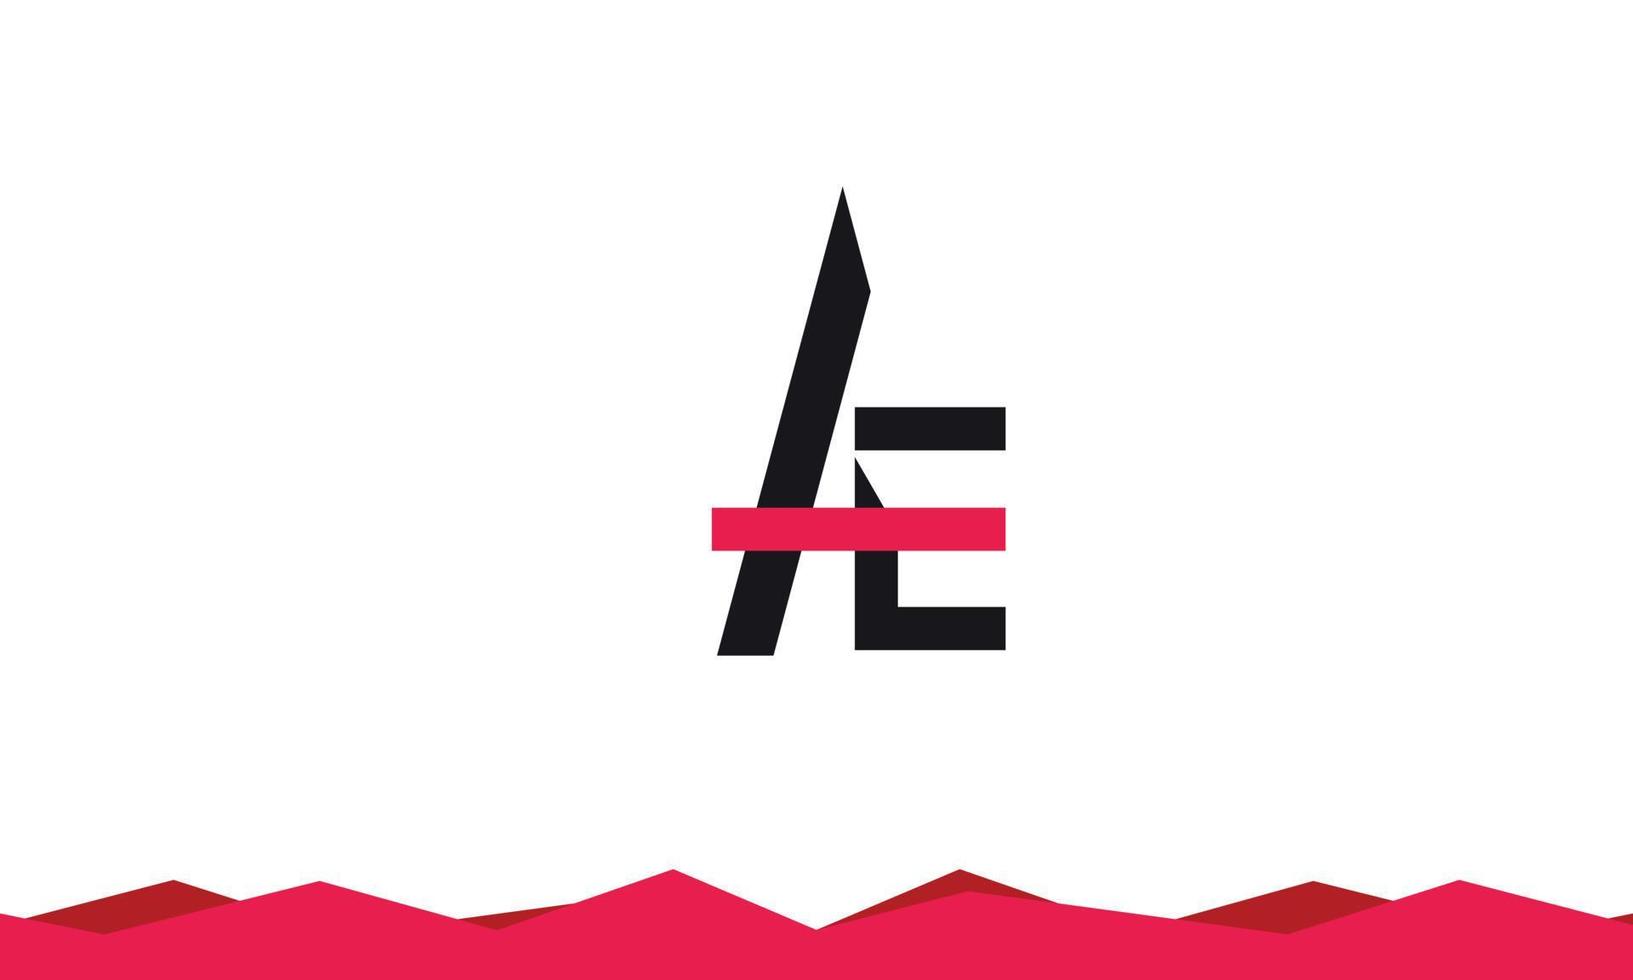 Alphabet letters Initials Monogram logo AE, EA, A and E vector